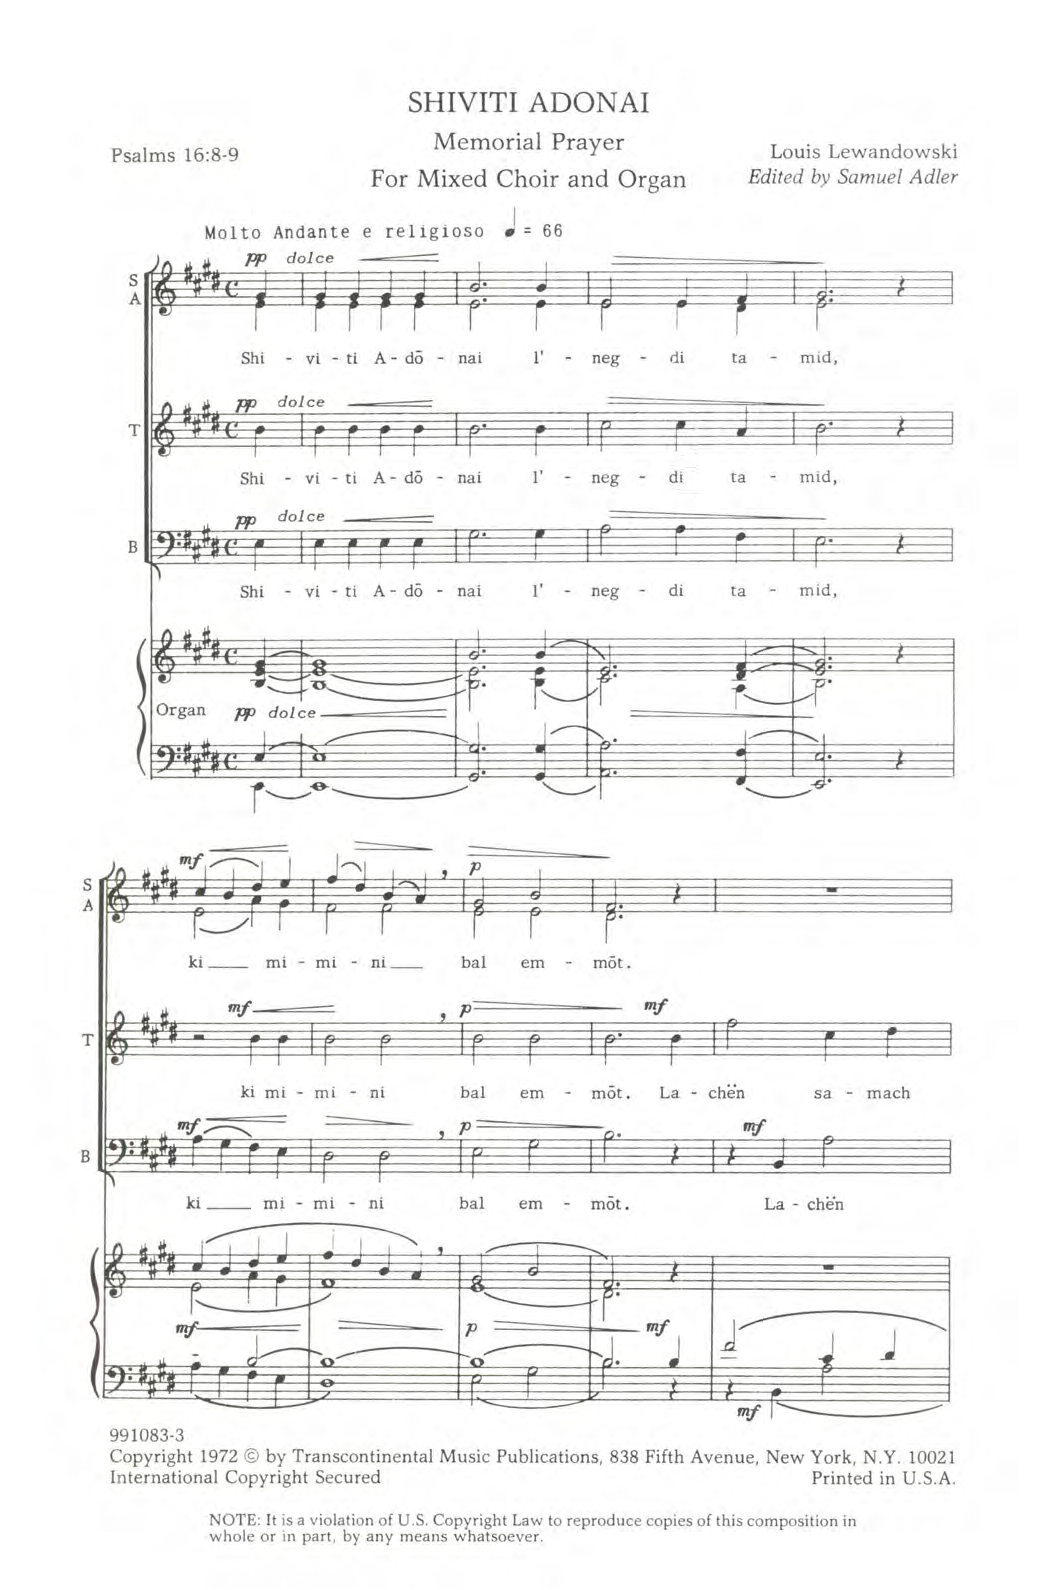 Download Louis Lewandowski Shiviti Adonai Sheet Music and learn how to play SATB Choir PDF digital score in minutes